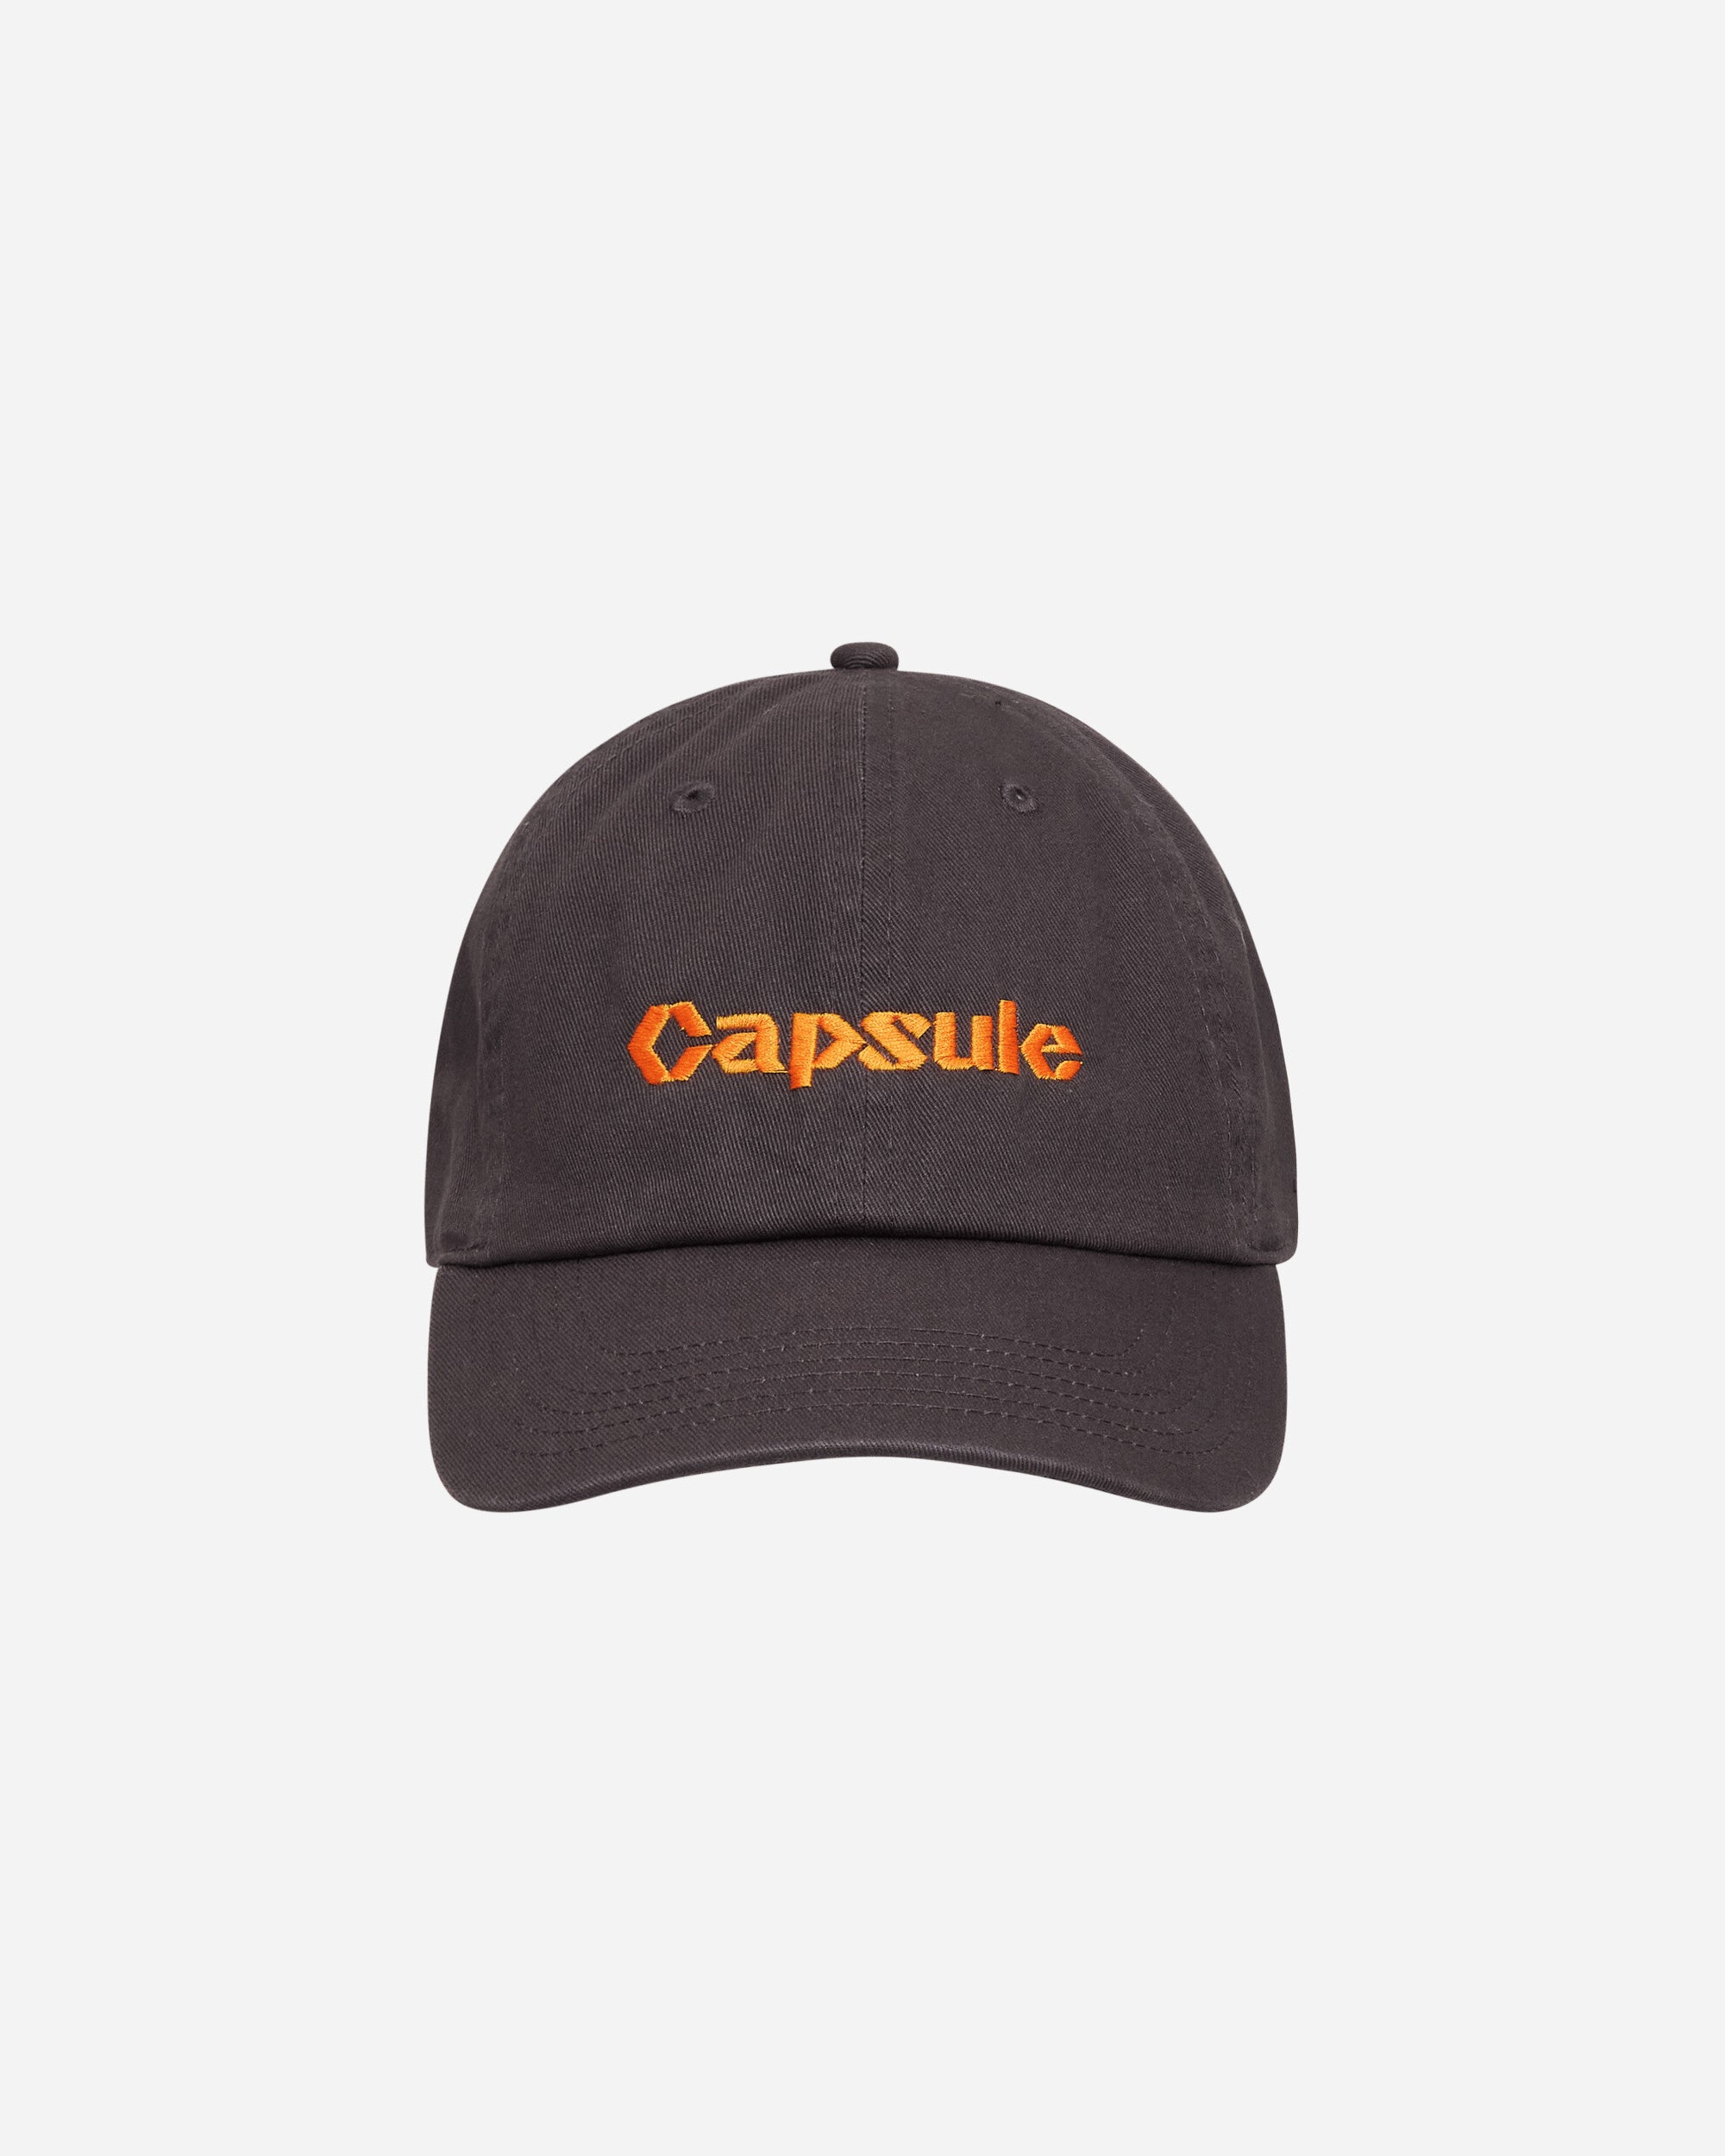 Capsule Capsule Embroidered Logo Cap Charcoal Hats Caps CAPLOGOHAT GREY